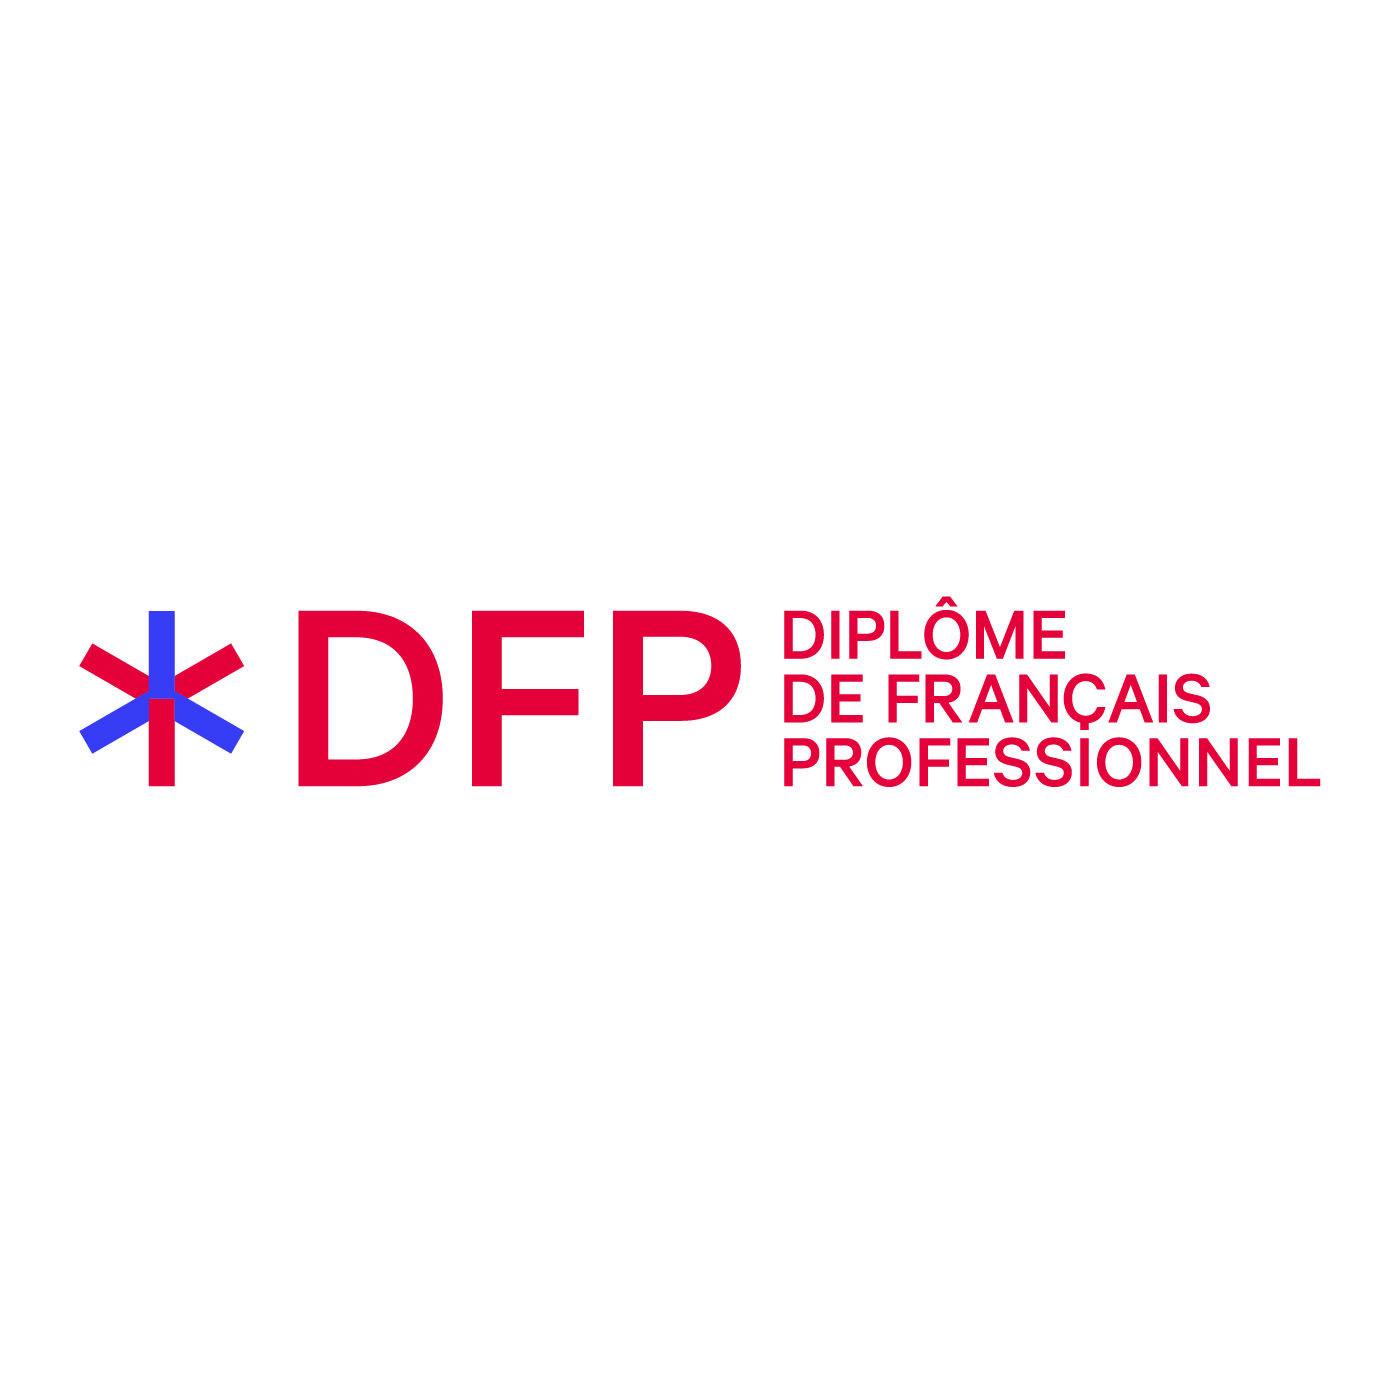 DFP Relations Internationales